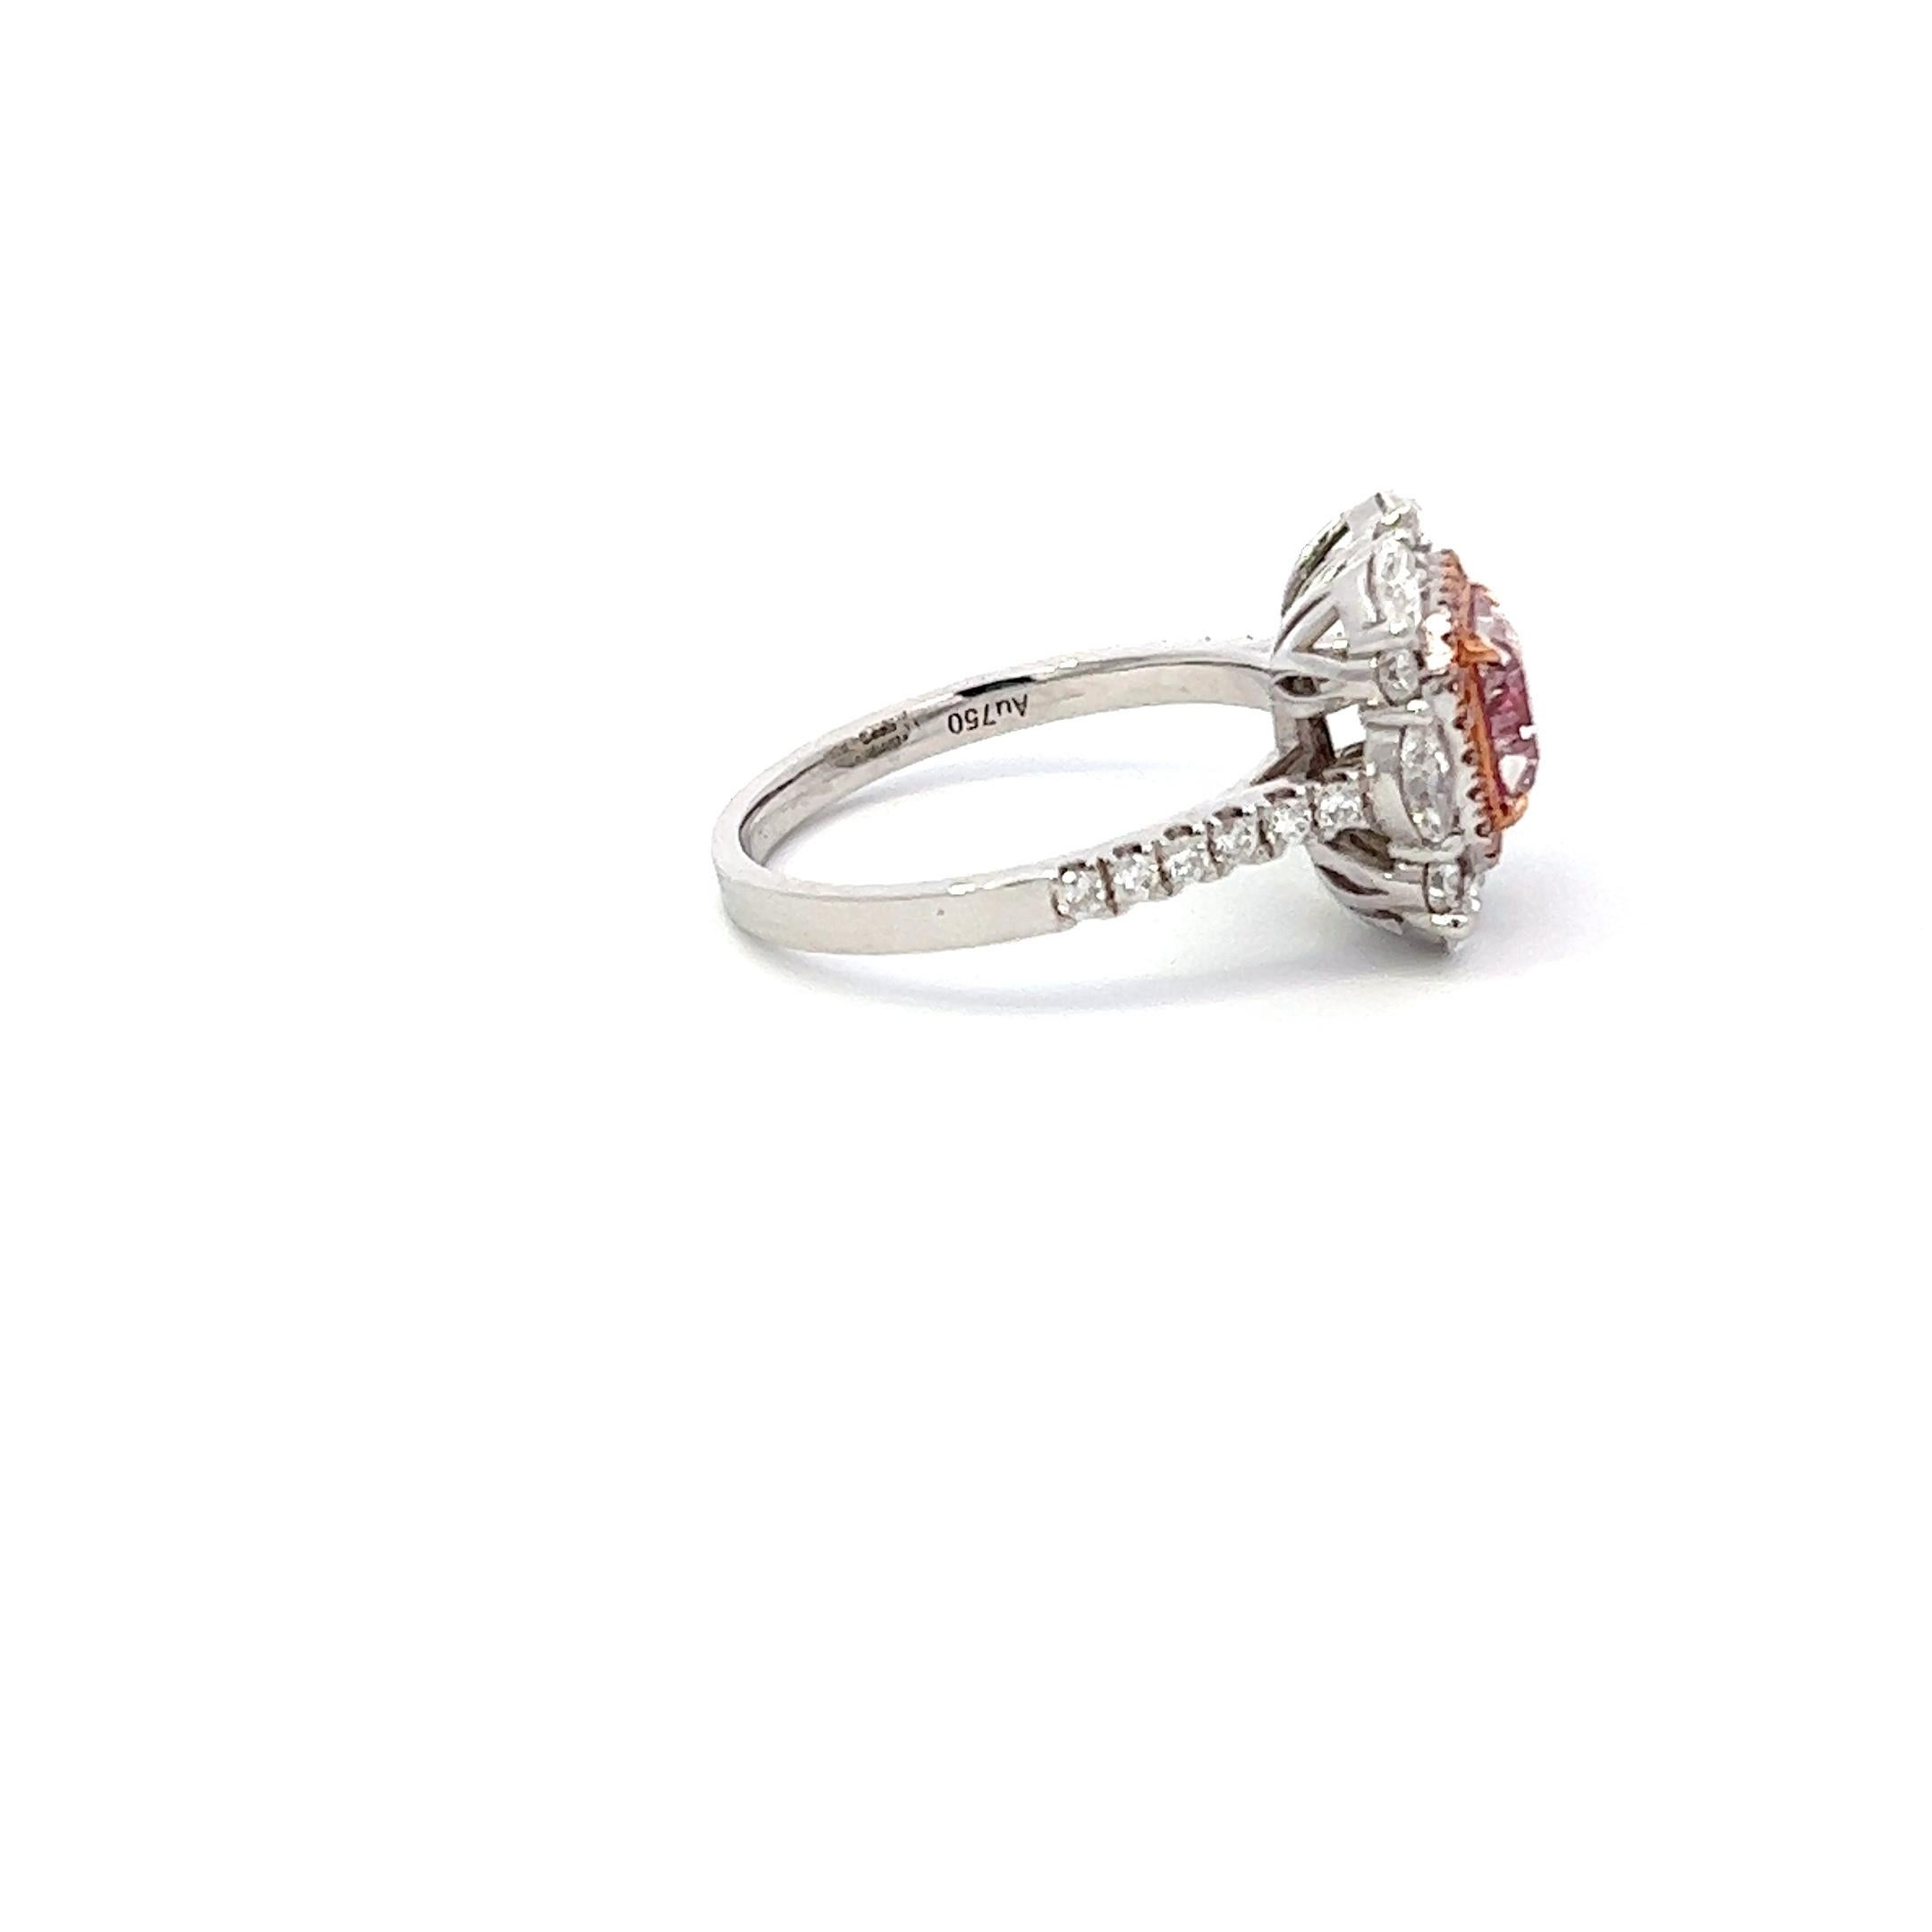 Cushion Cut GIA Certified 1.27 Carat Pink Diamond Ring For Sale